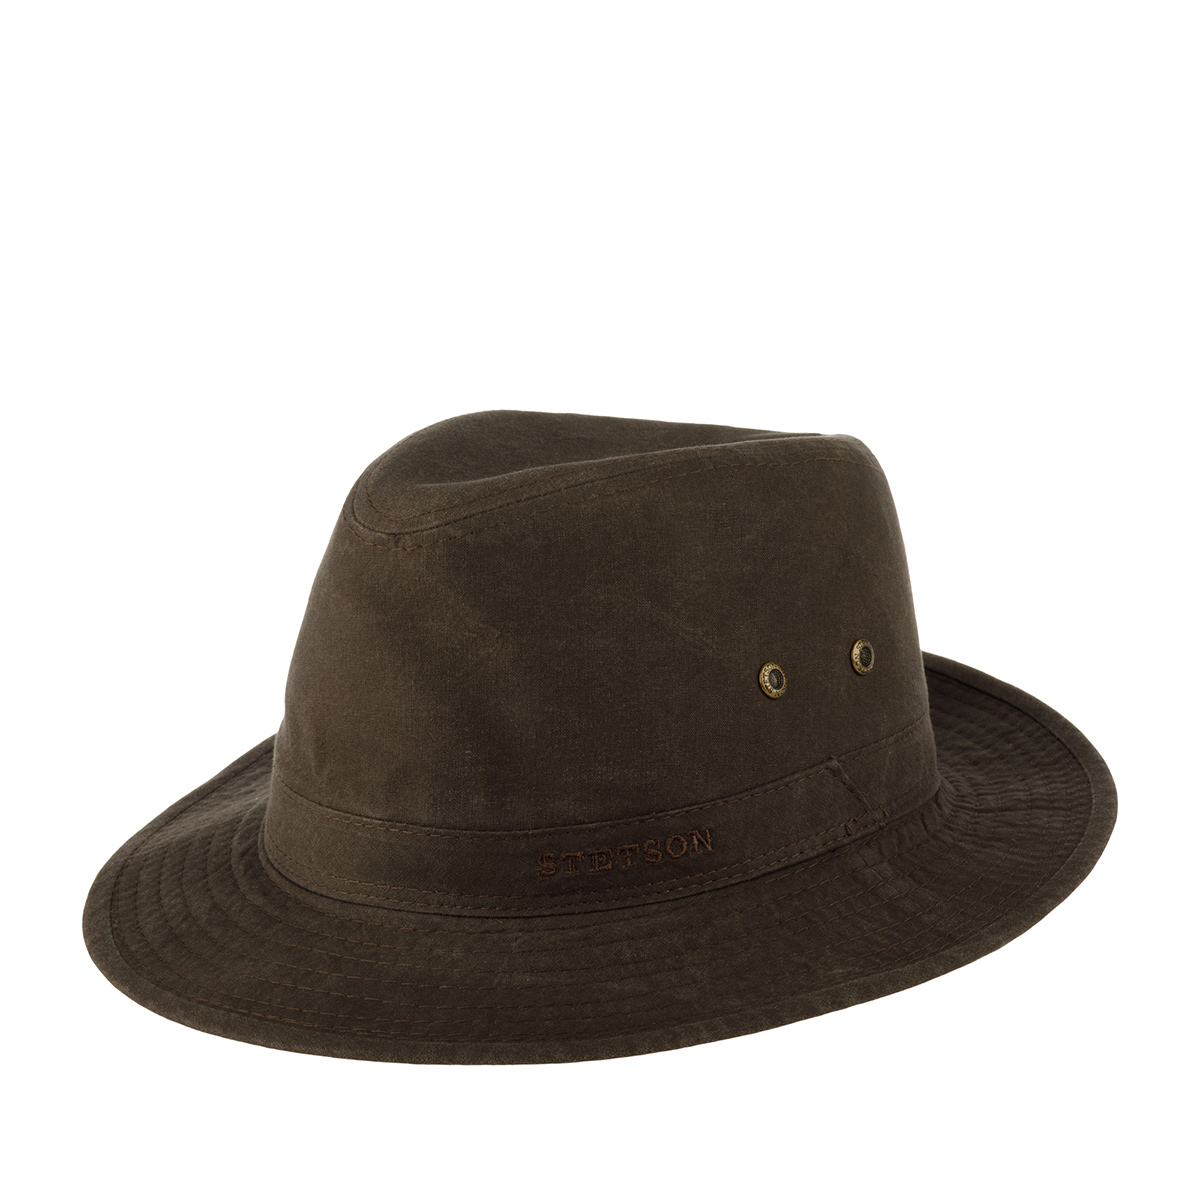 Шляпа унисекс Stetson 2541114 TRAVELLER DELAVE коричневая, р.61